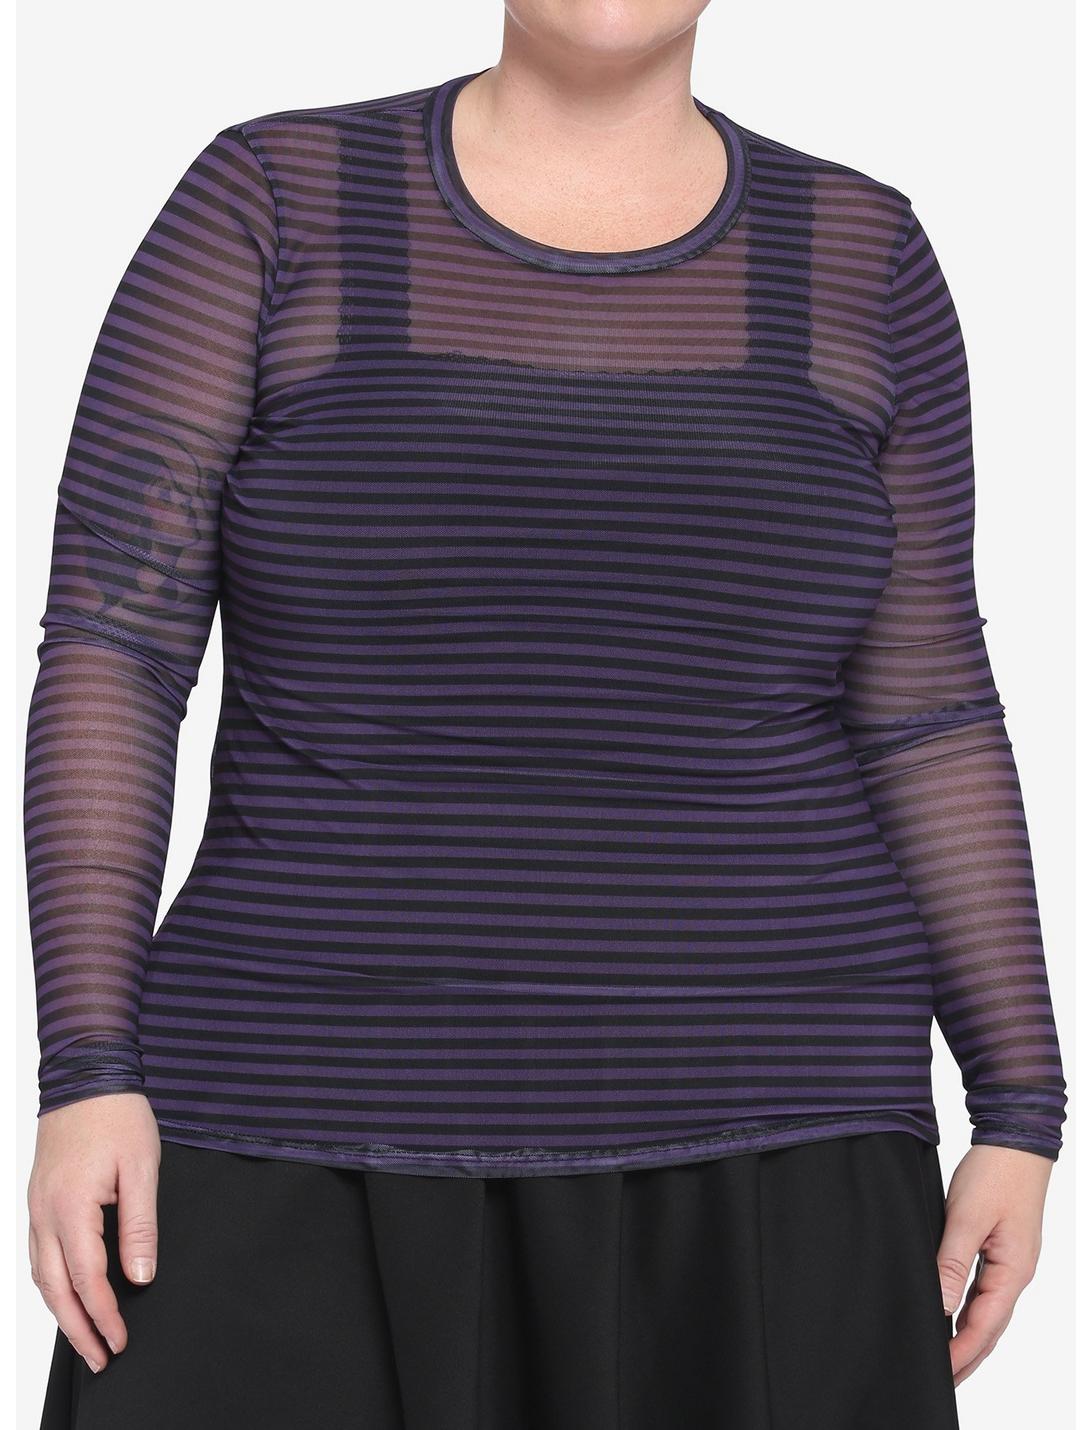 Purple & Black Stripe Mesh Girls Long-Sleeve Top Plus Size, STRIPE - PURPLE, hi-res